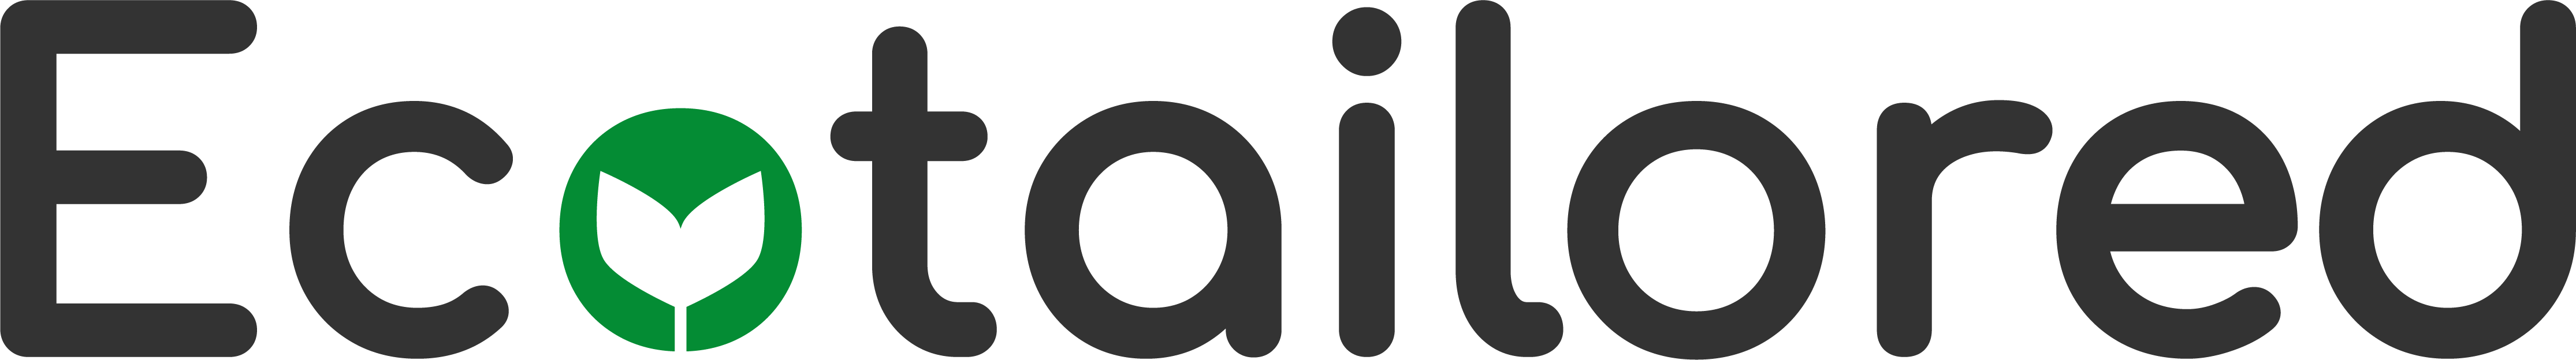 Ecotailored logo